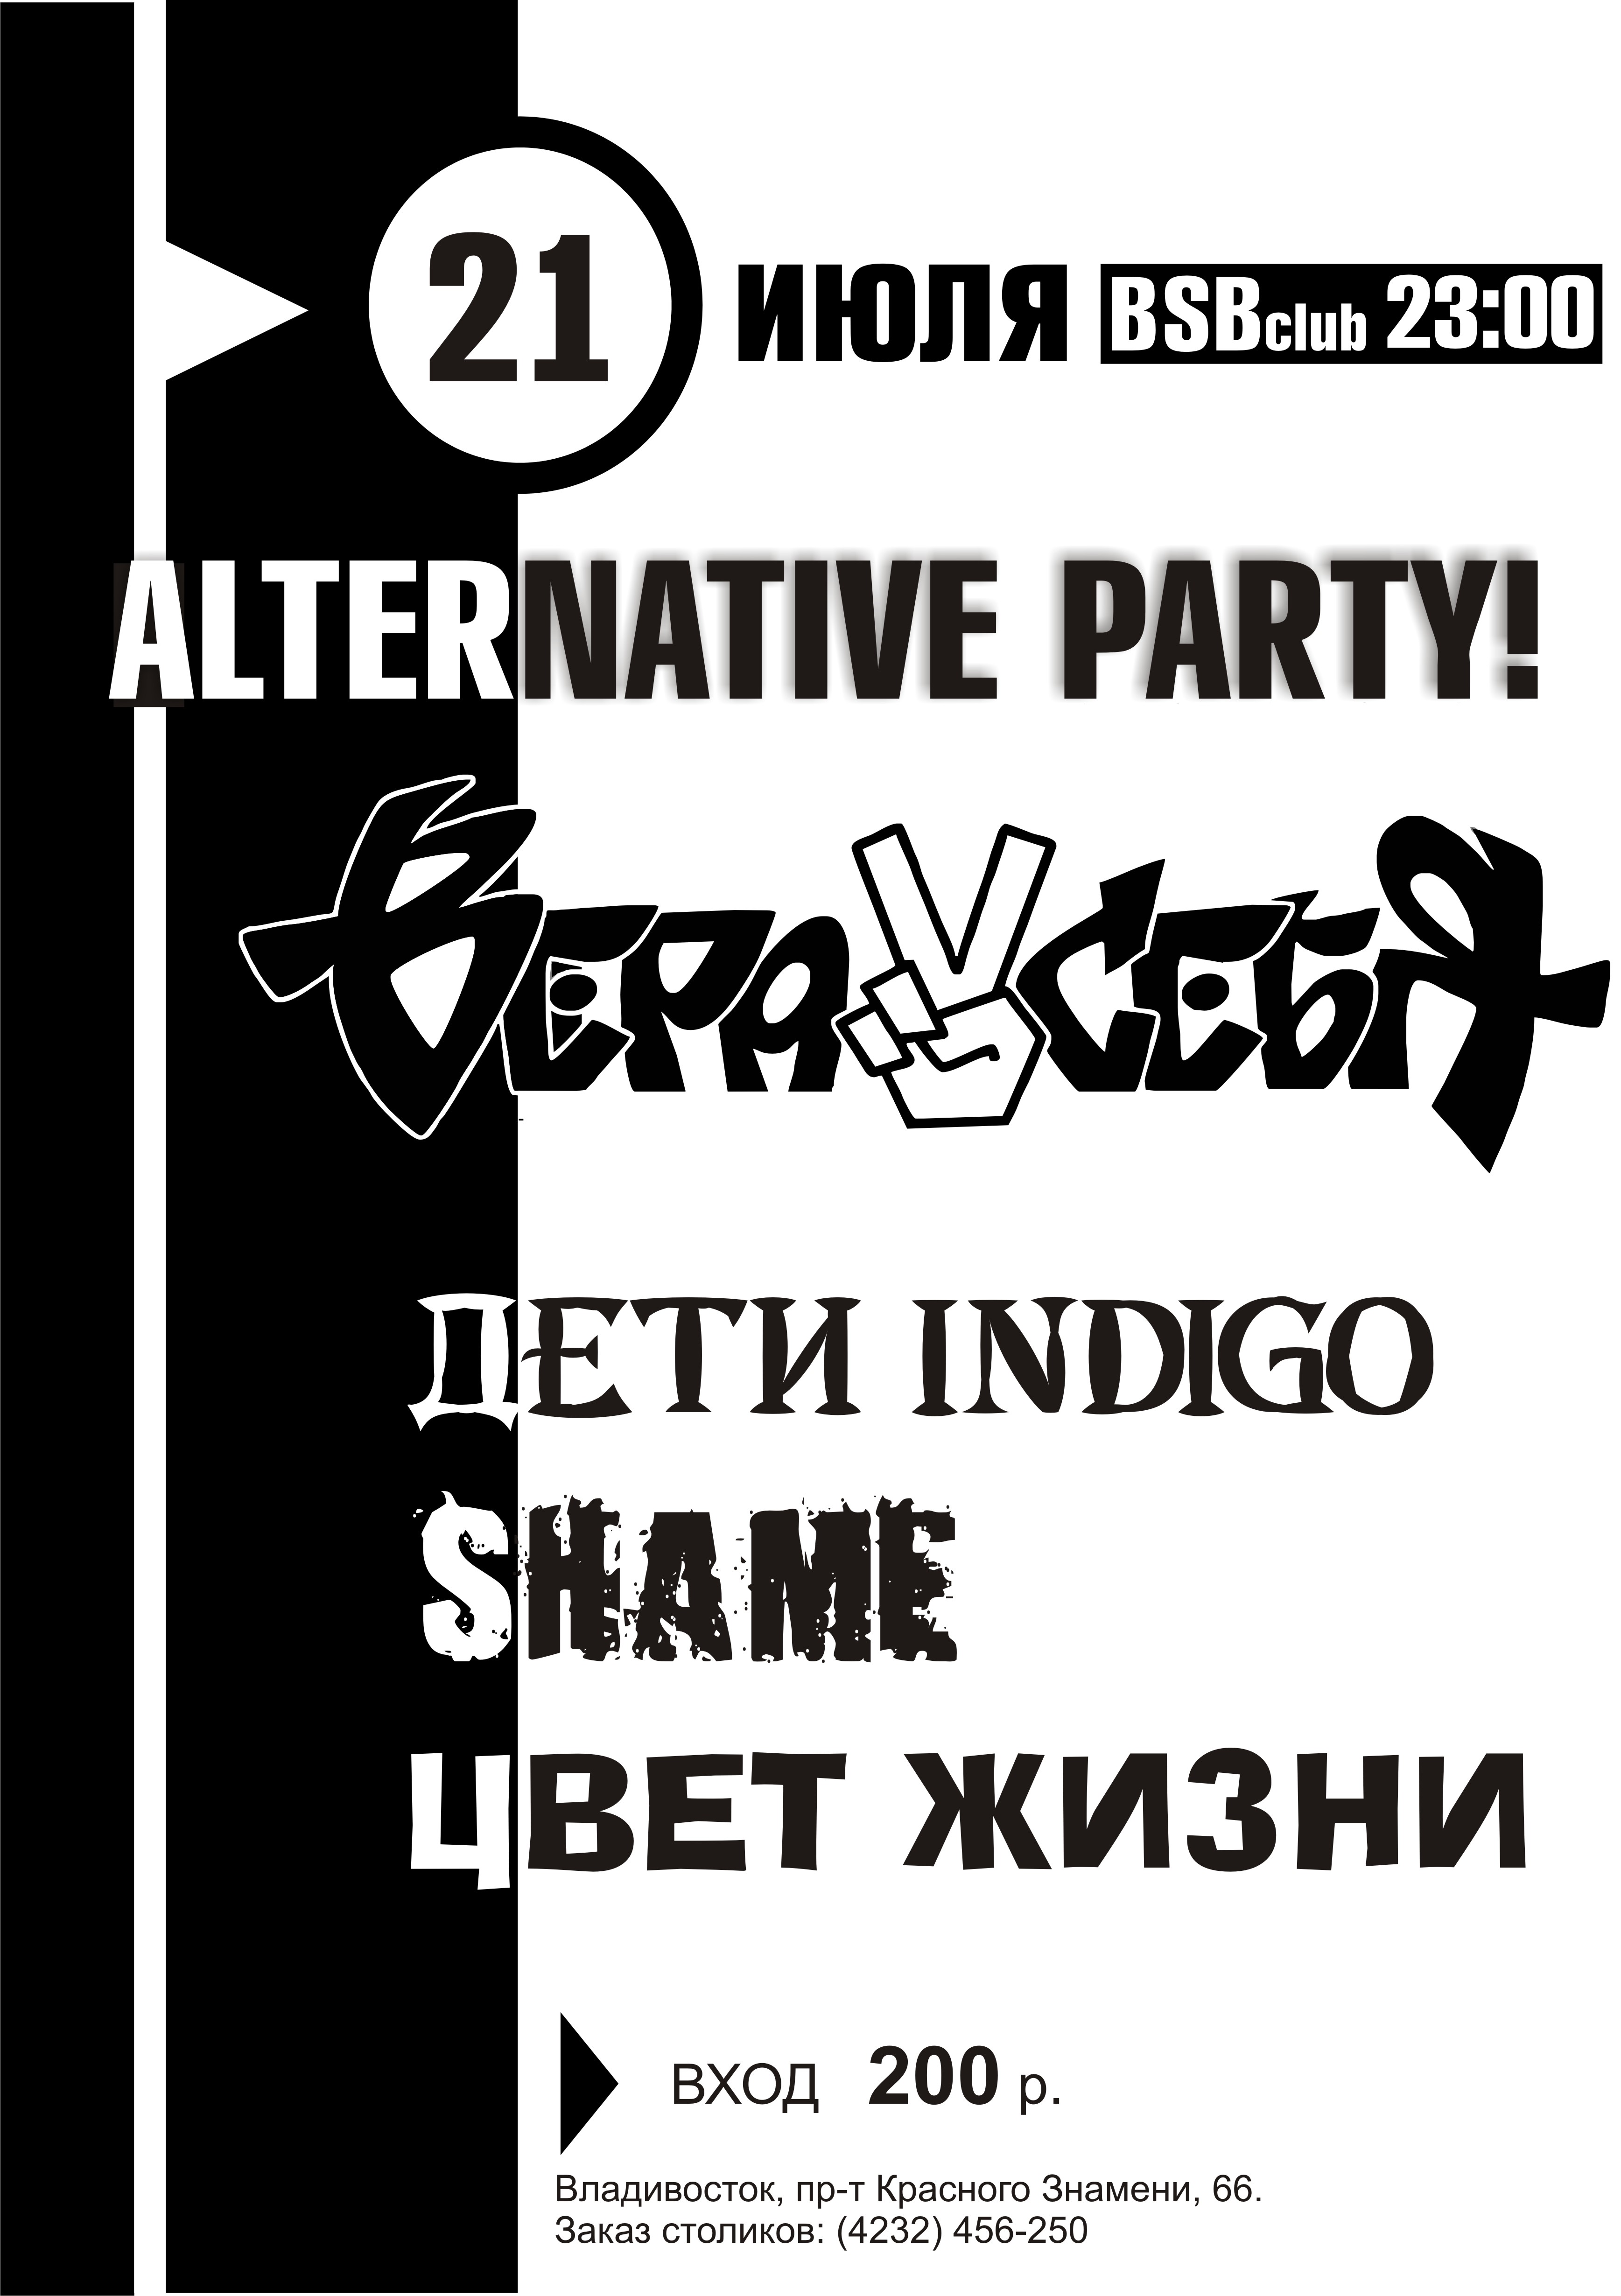 Alternative Party